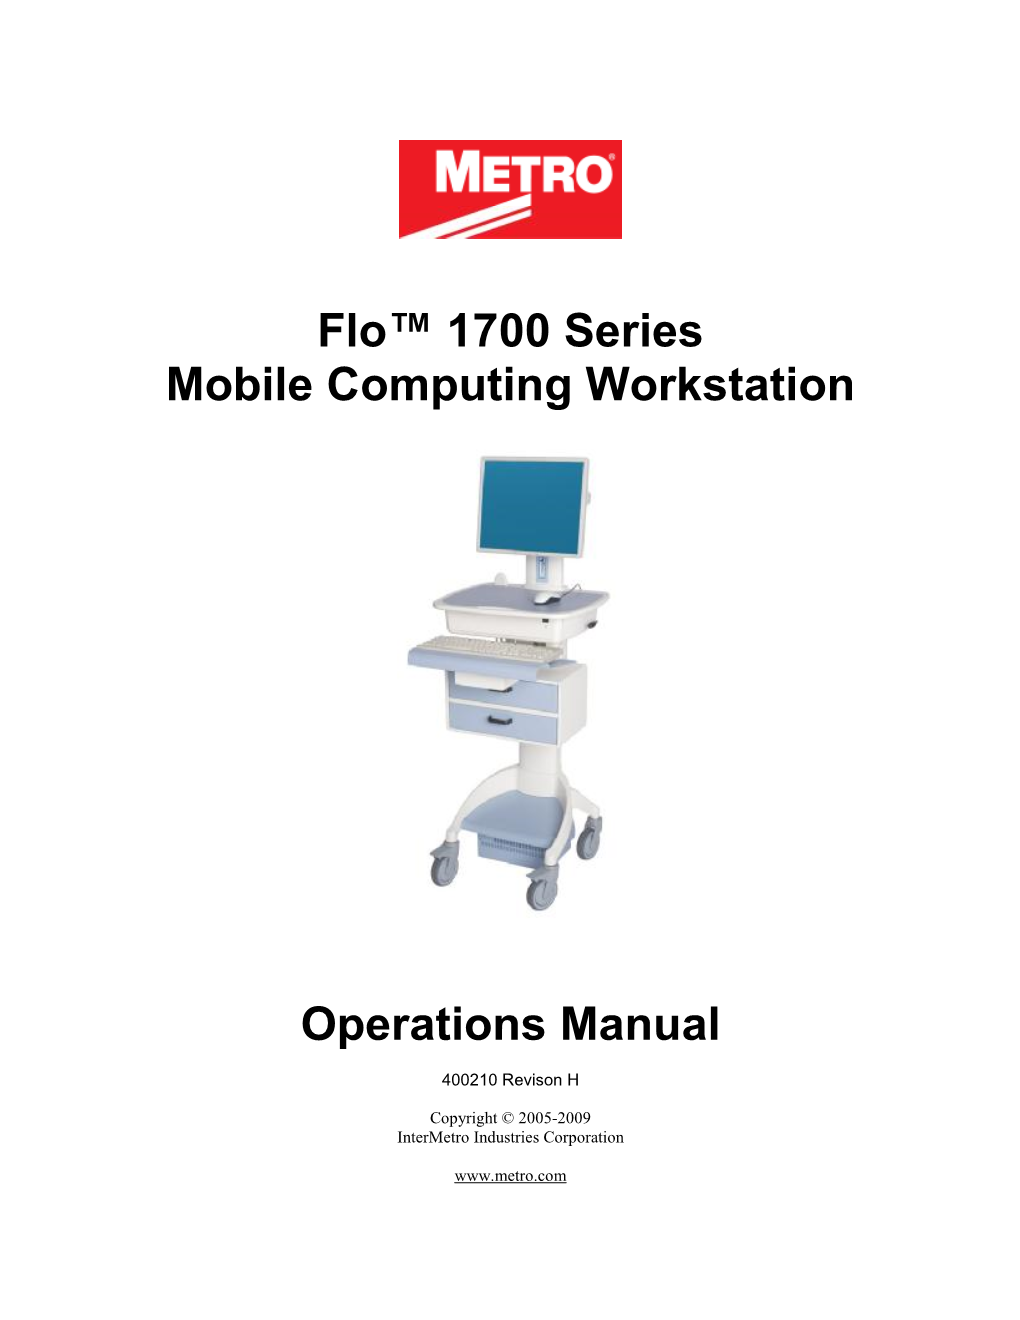 Flo™ 1700 Series Mobile Computing Workstation Operations Manual